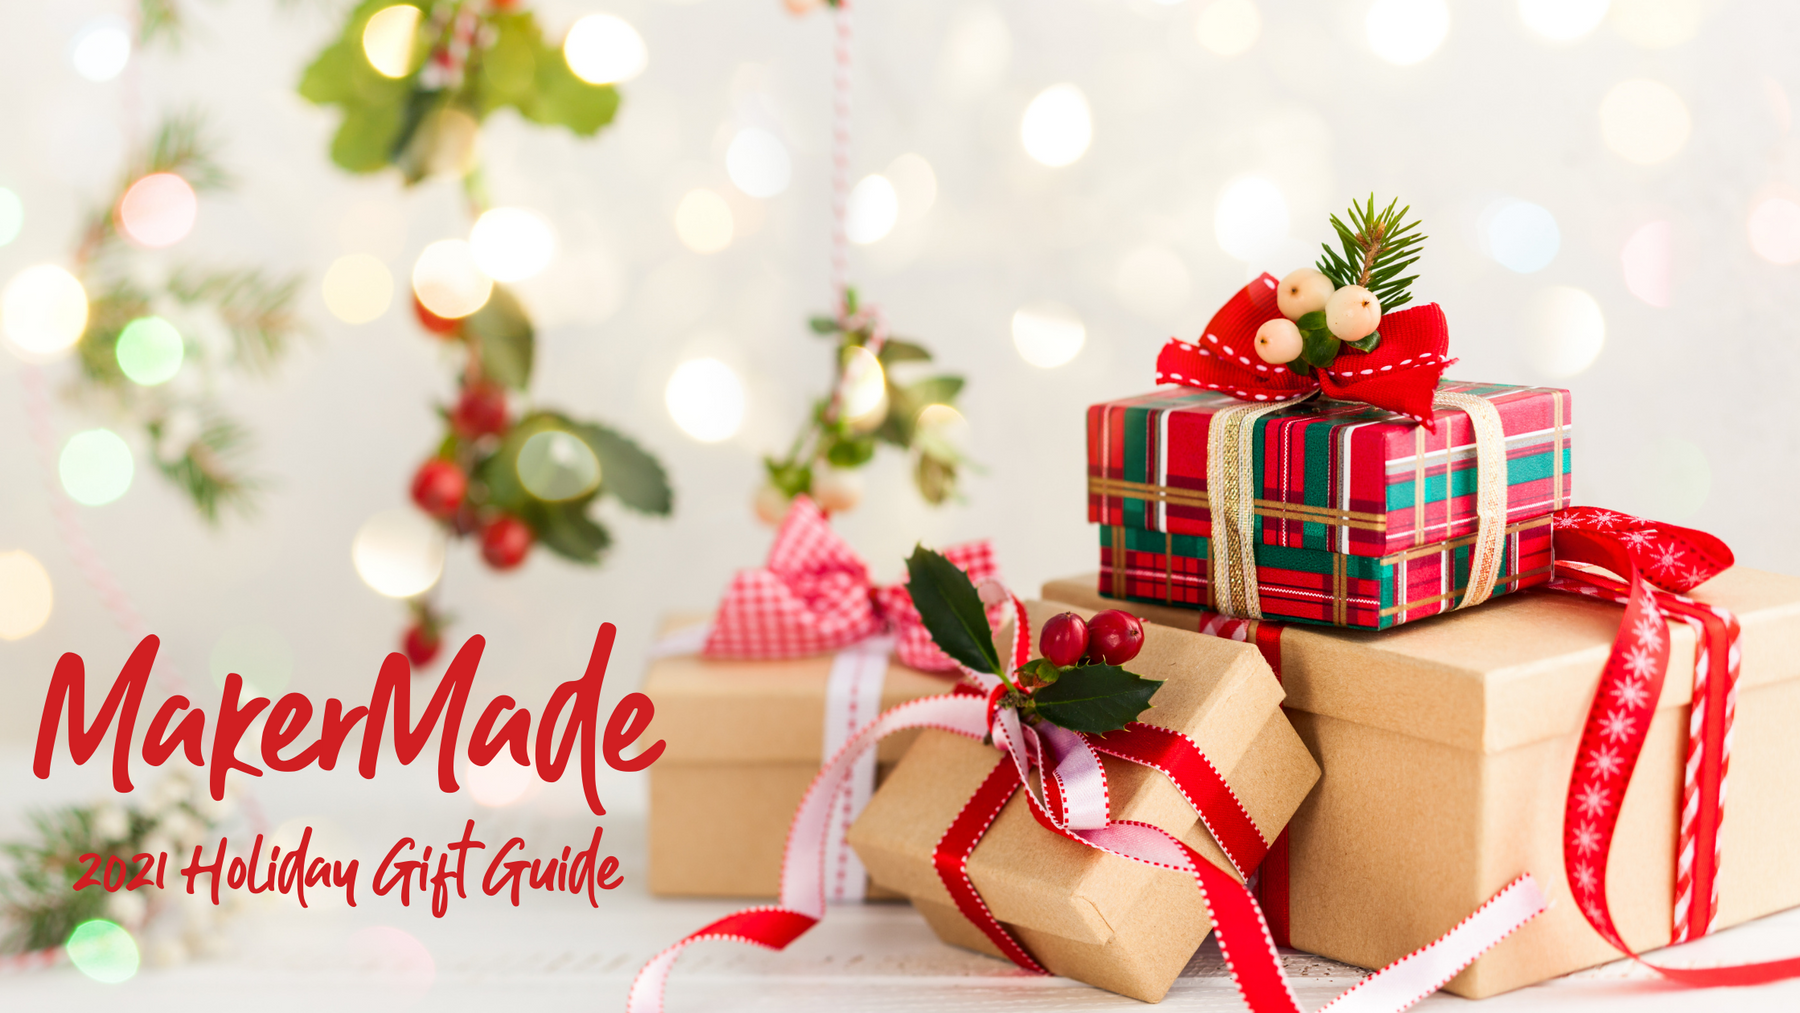 2021 Gift Guide for MakerMade Makers